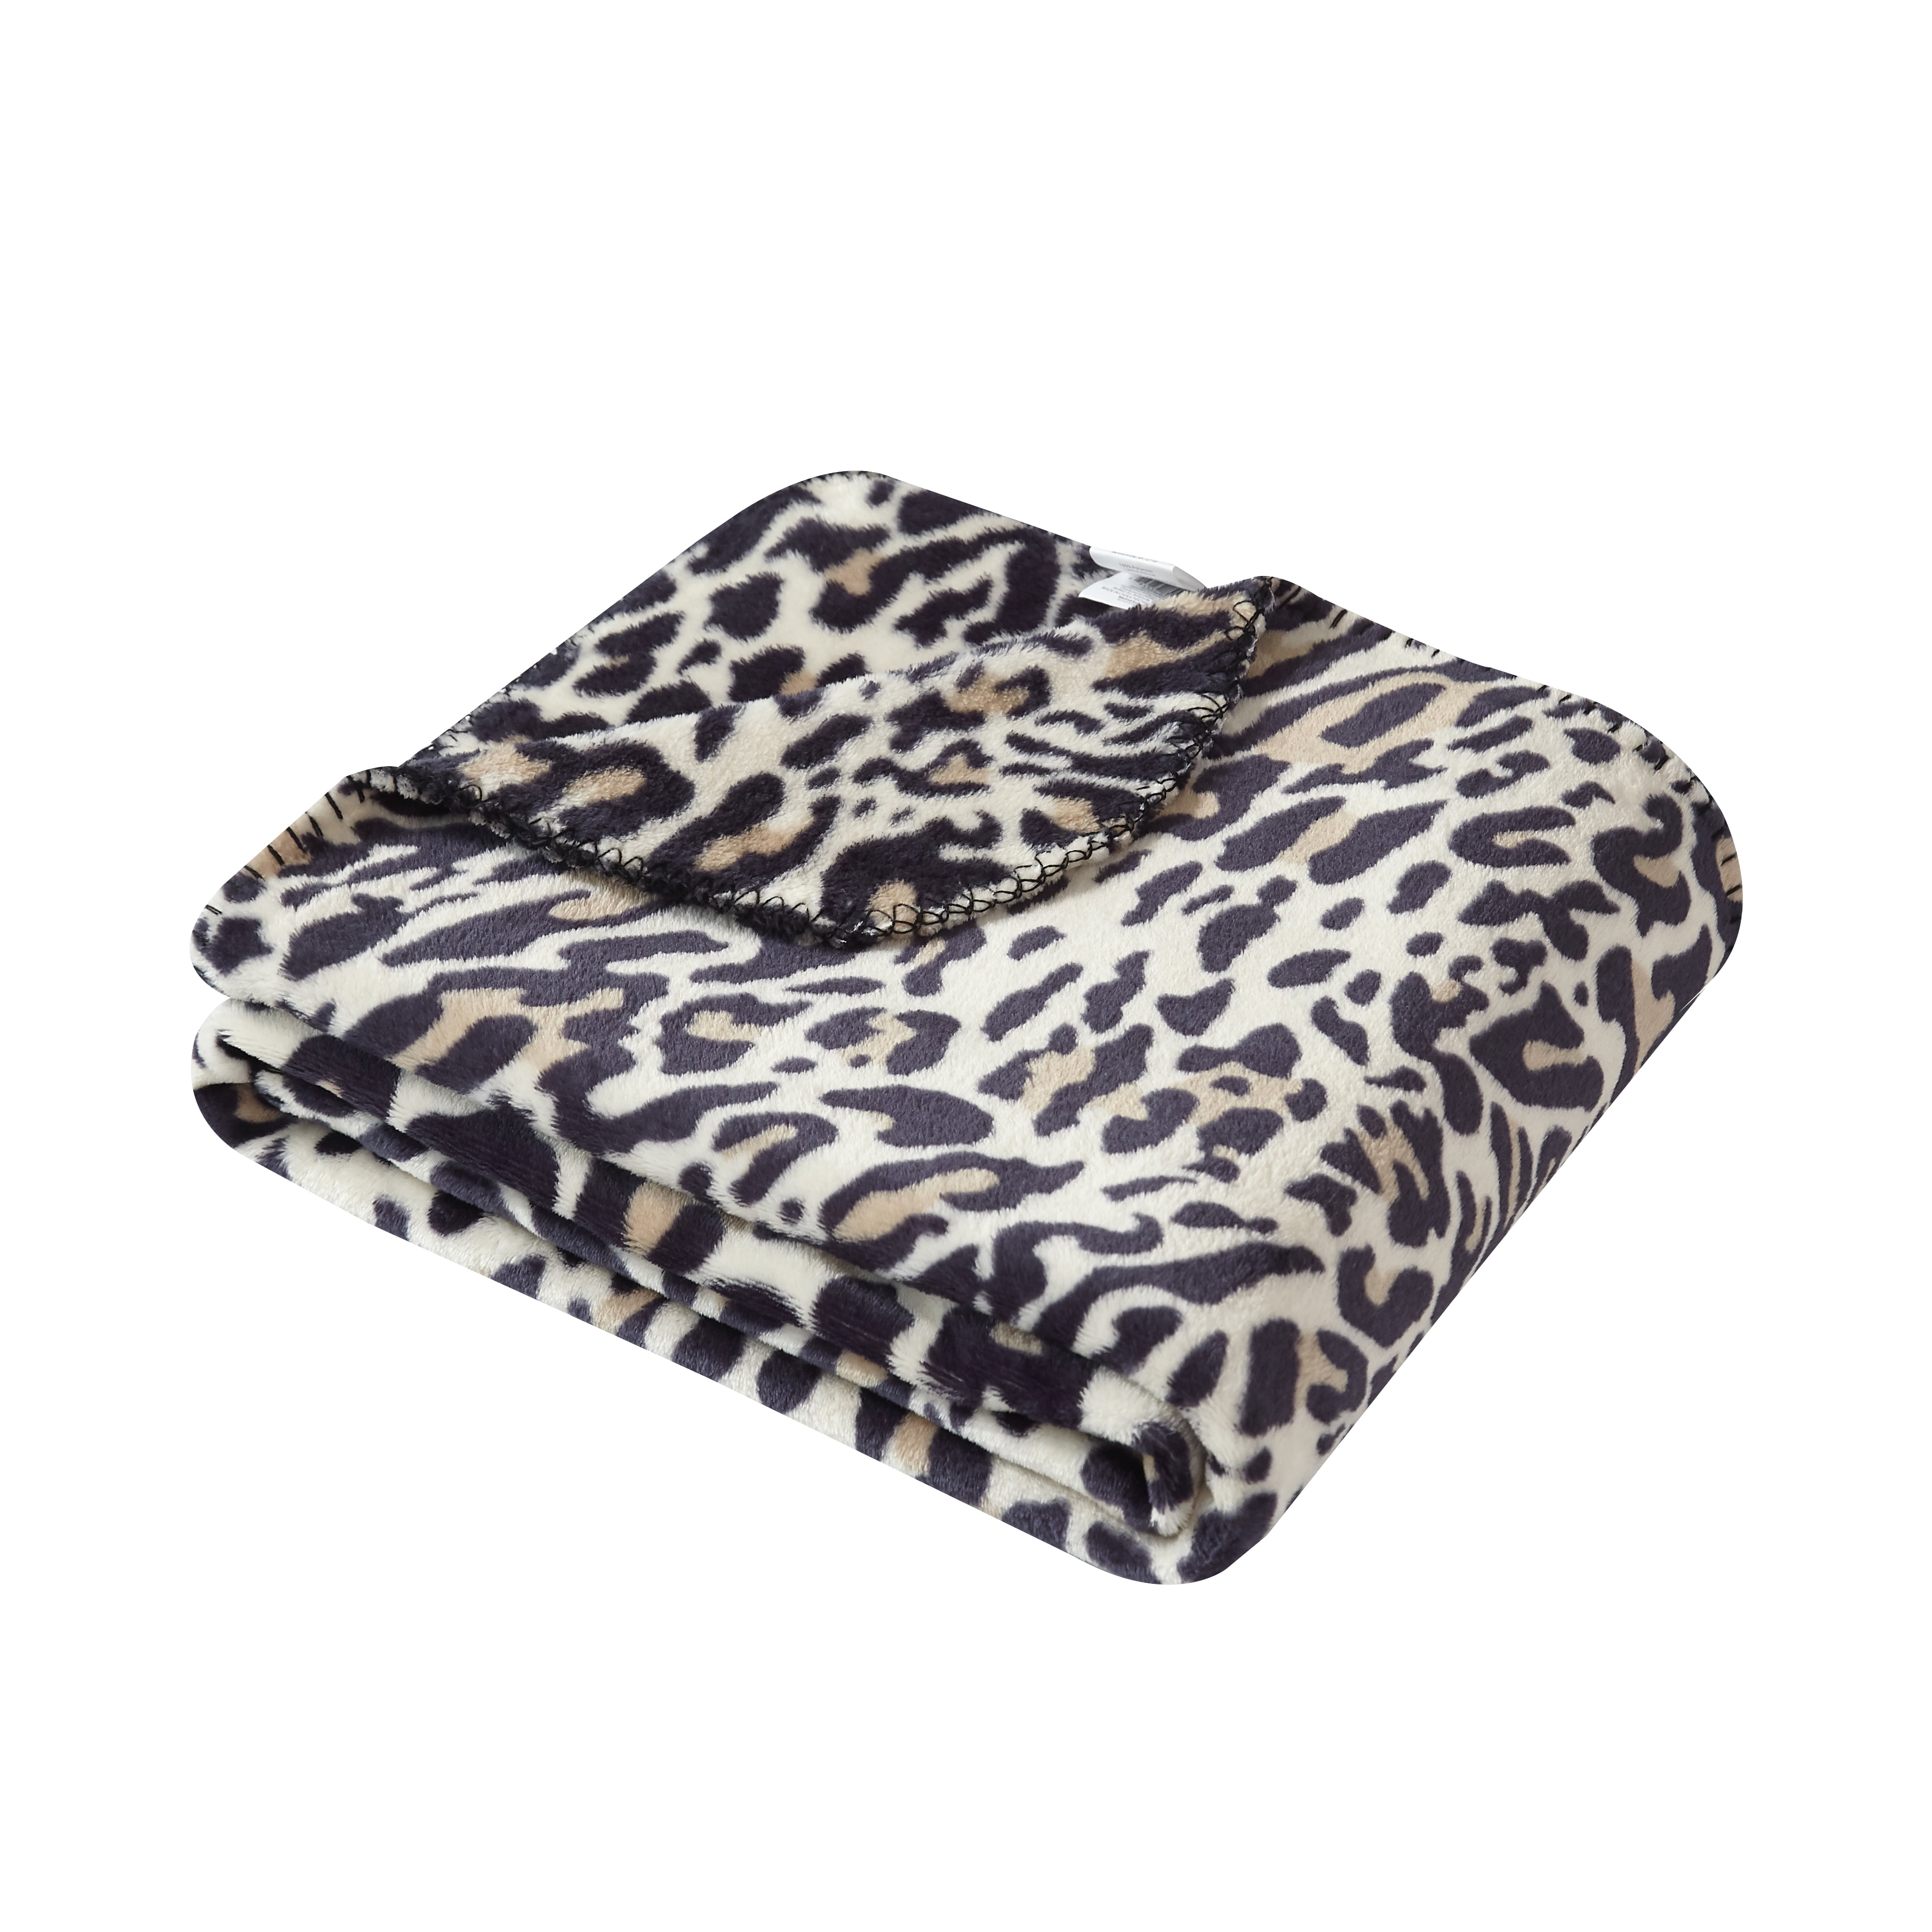 MAINSTAYS CHEETAH Leopard PRINT FLEECE THROW BLANKET Material Fabric 50 X 60 NEW 